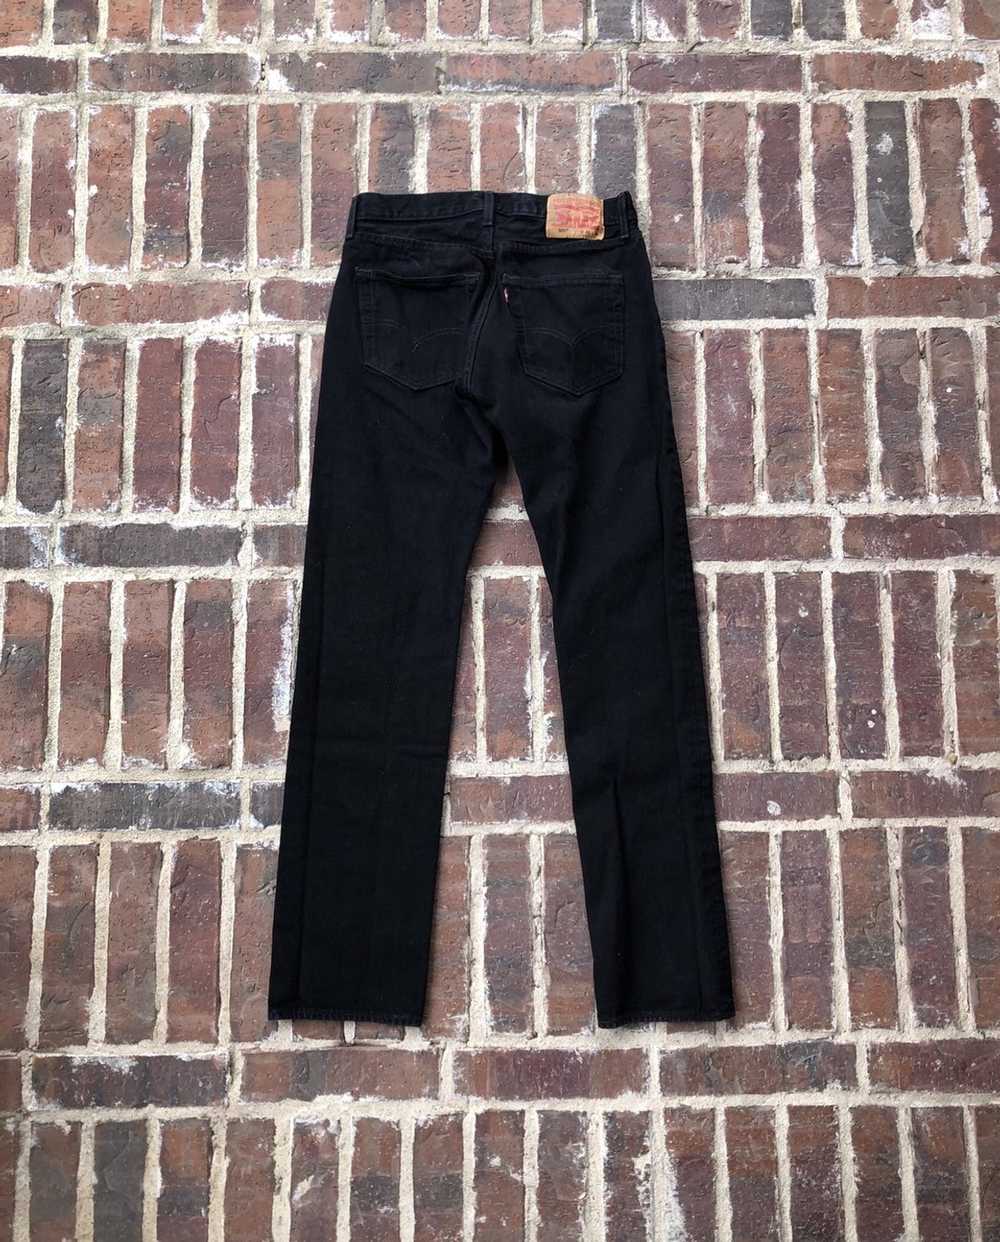 Levi's 501 Black denim jeans 31x34 - image 2